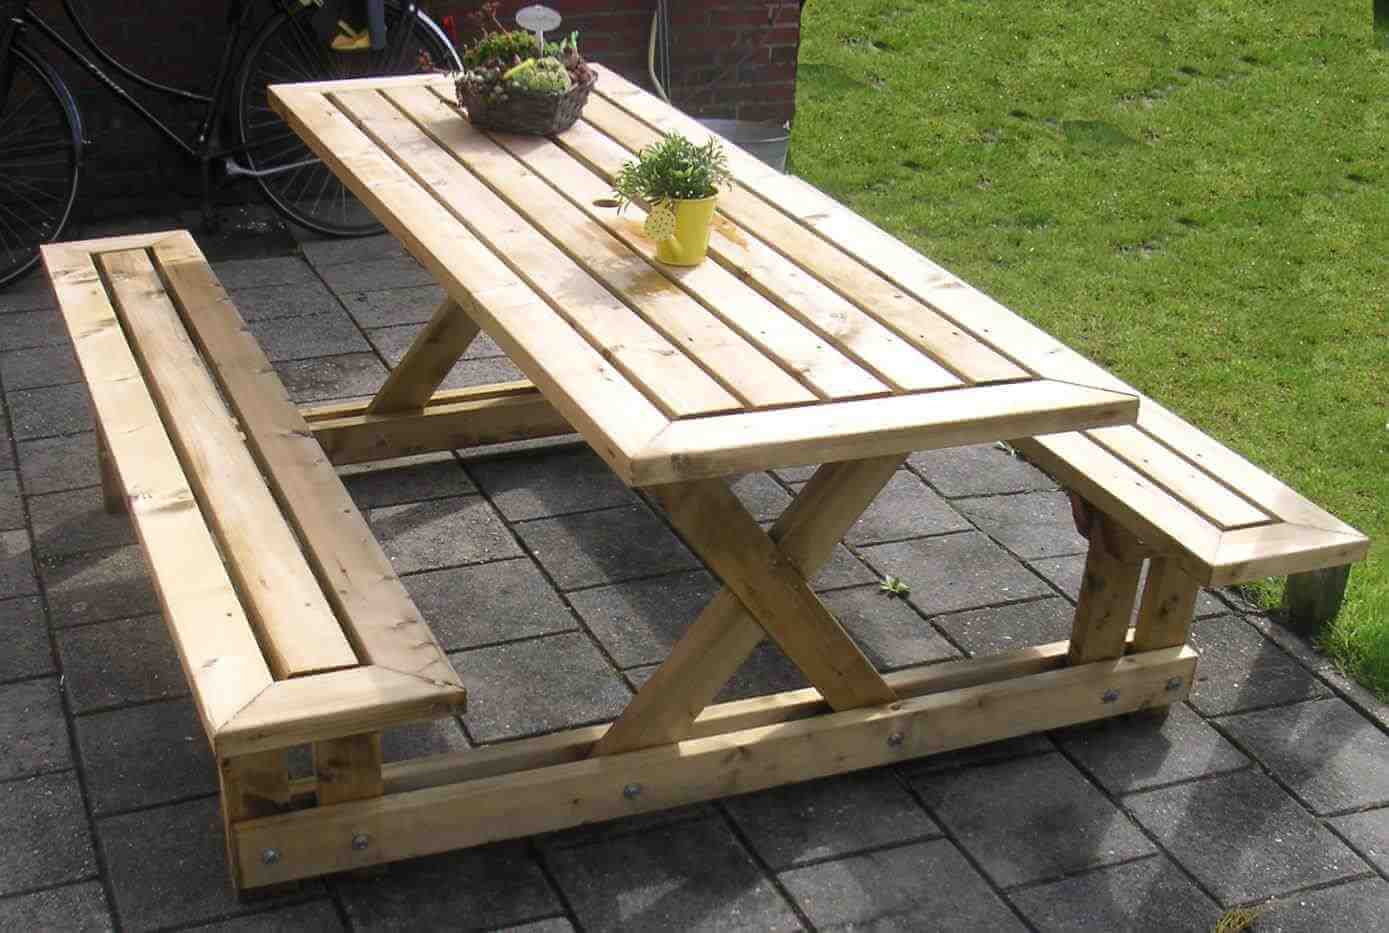 DIY outdoor furniture